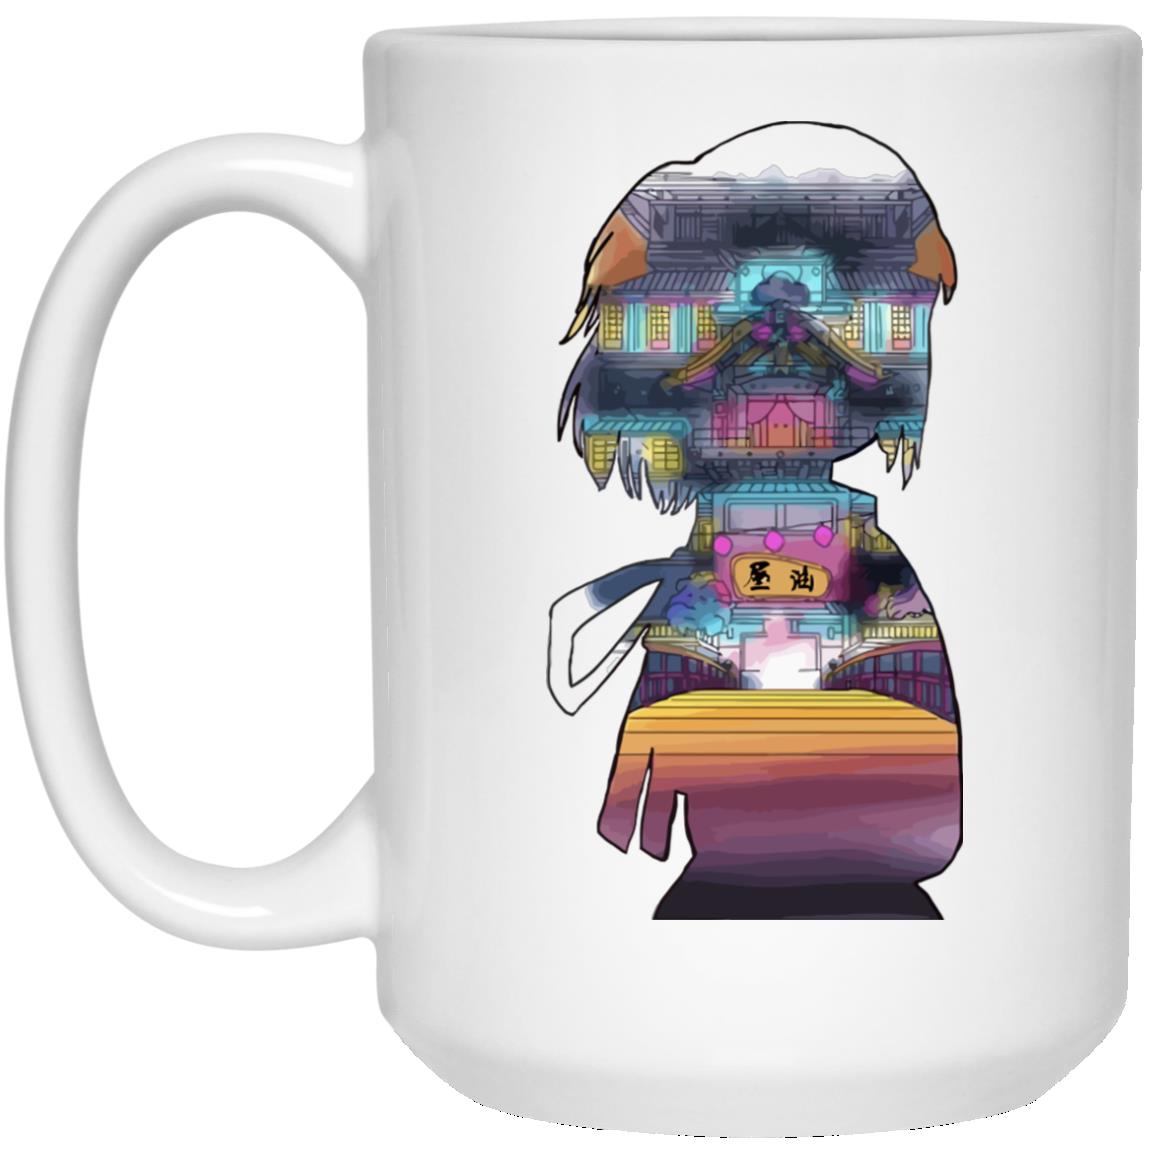 Spirited Away – Sen and The Bathhouse Cutout Colorful Mug